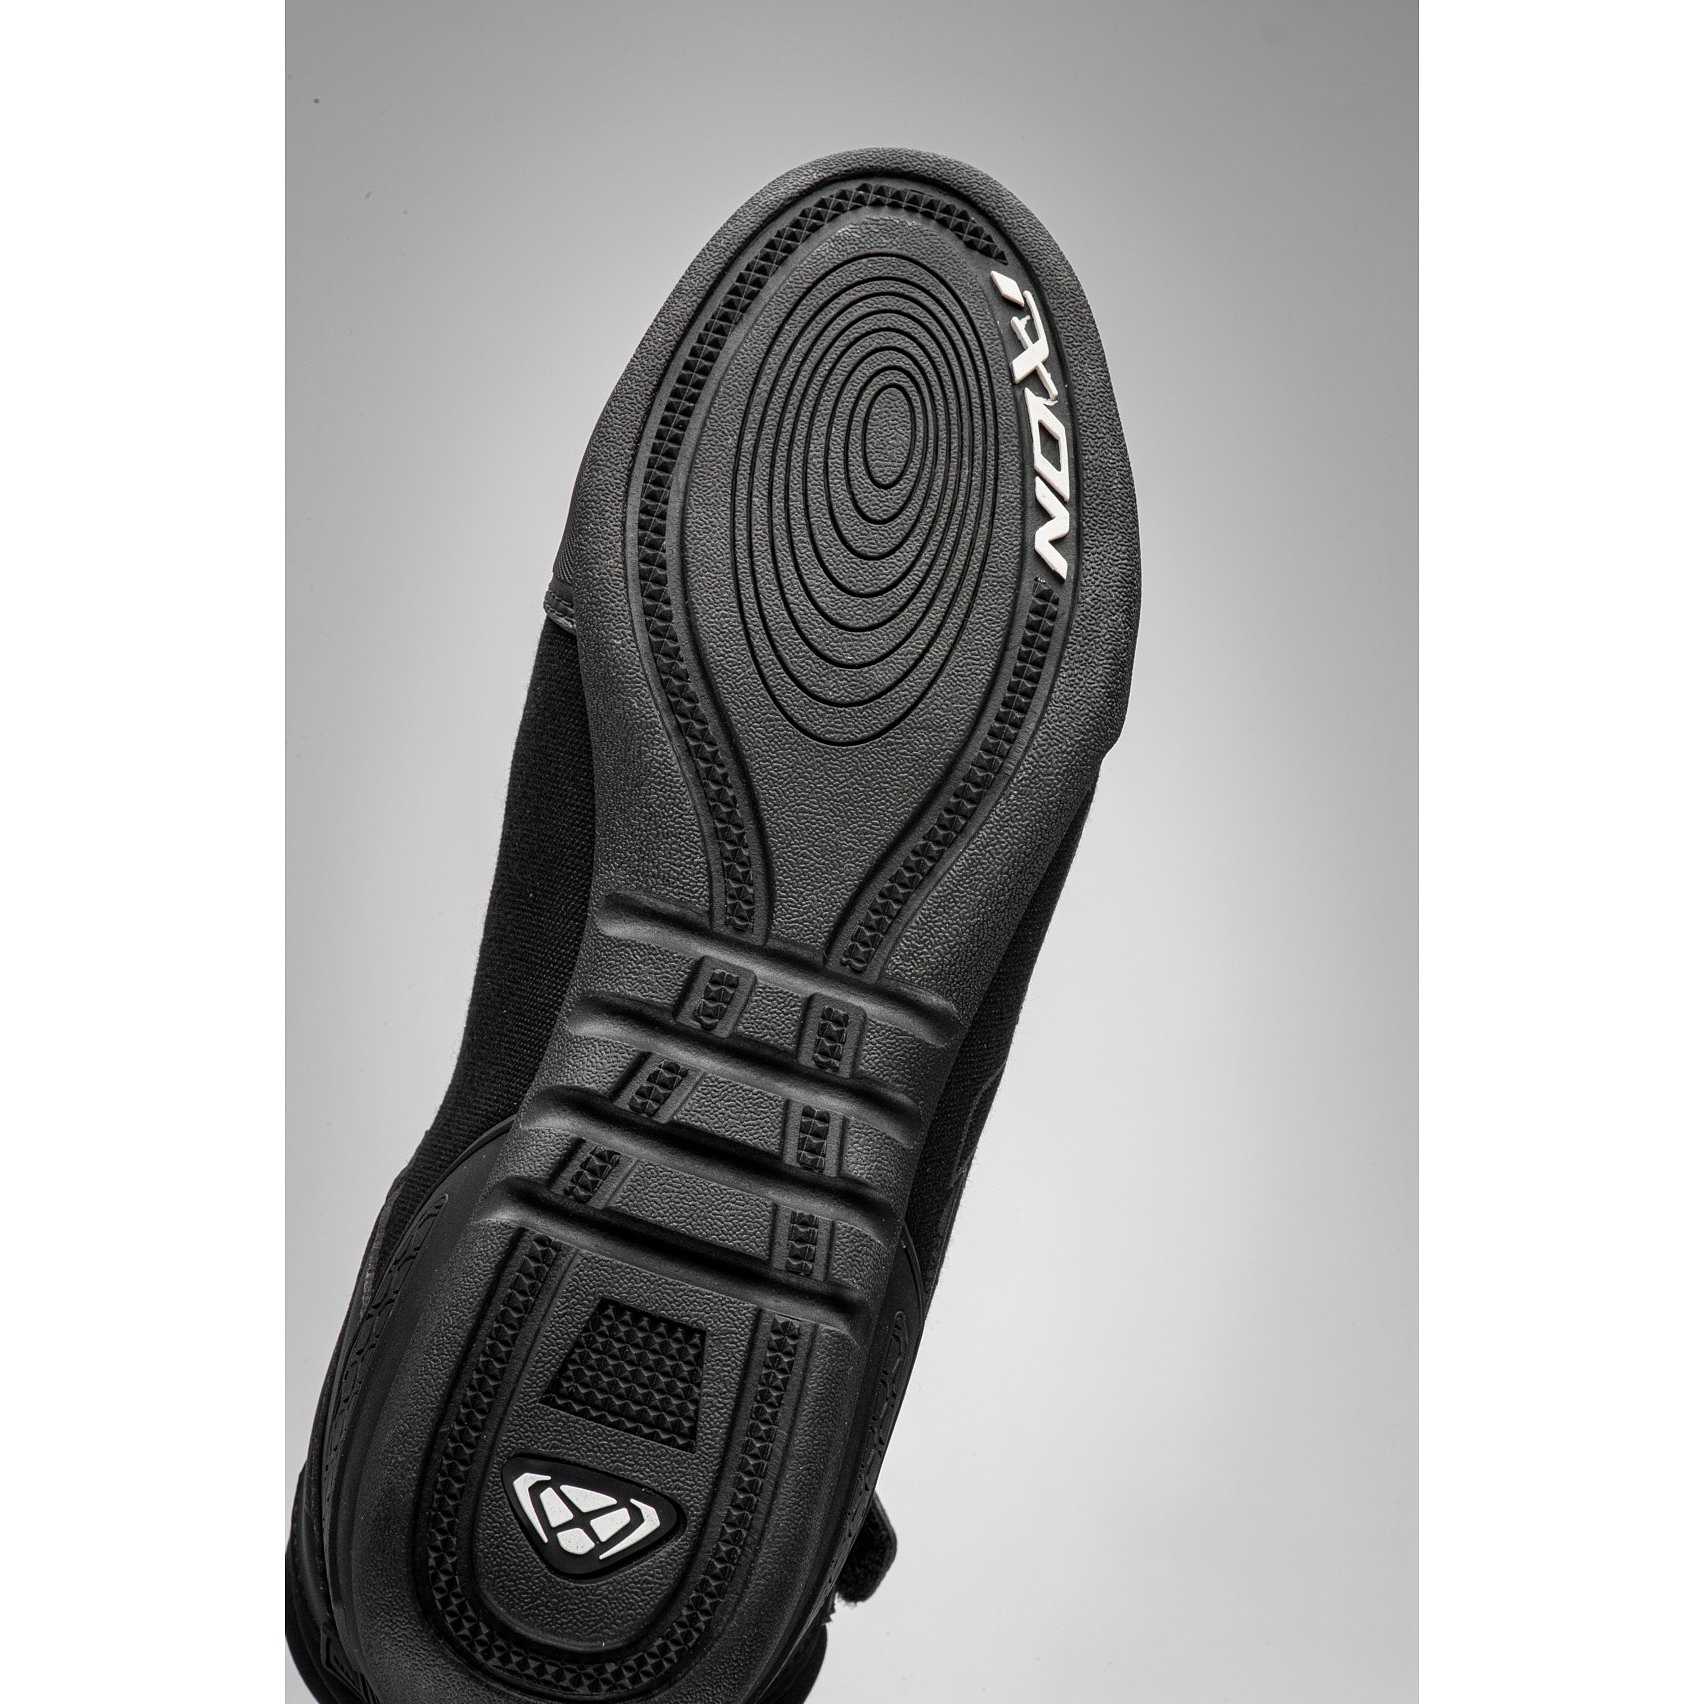 Chaussures moto Ixon ranker waterproof - Chaussures homme - Bottes et  chaussures - Equipement du motard